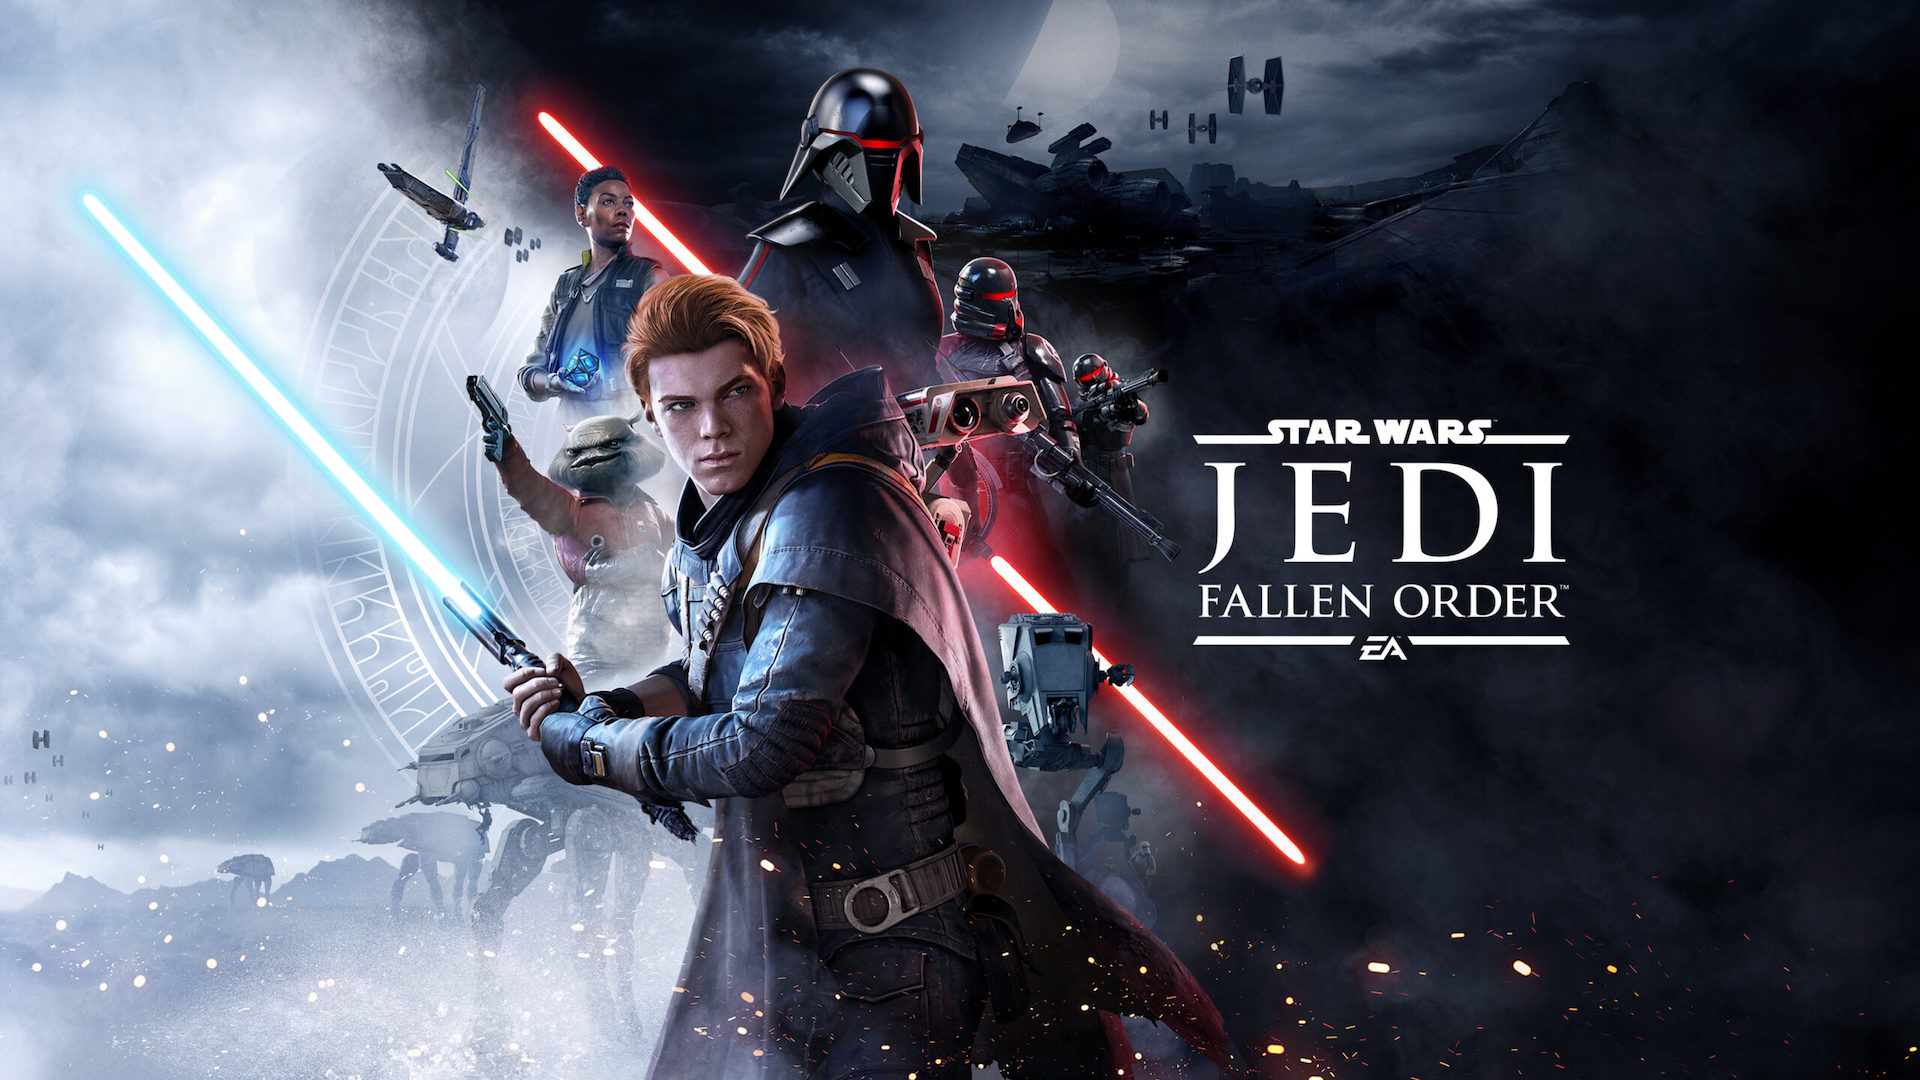 The cover art for Star Wars Jedi: Fallen Order